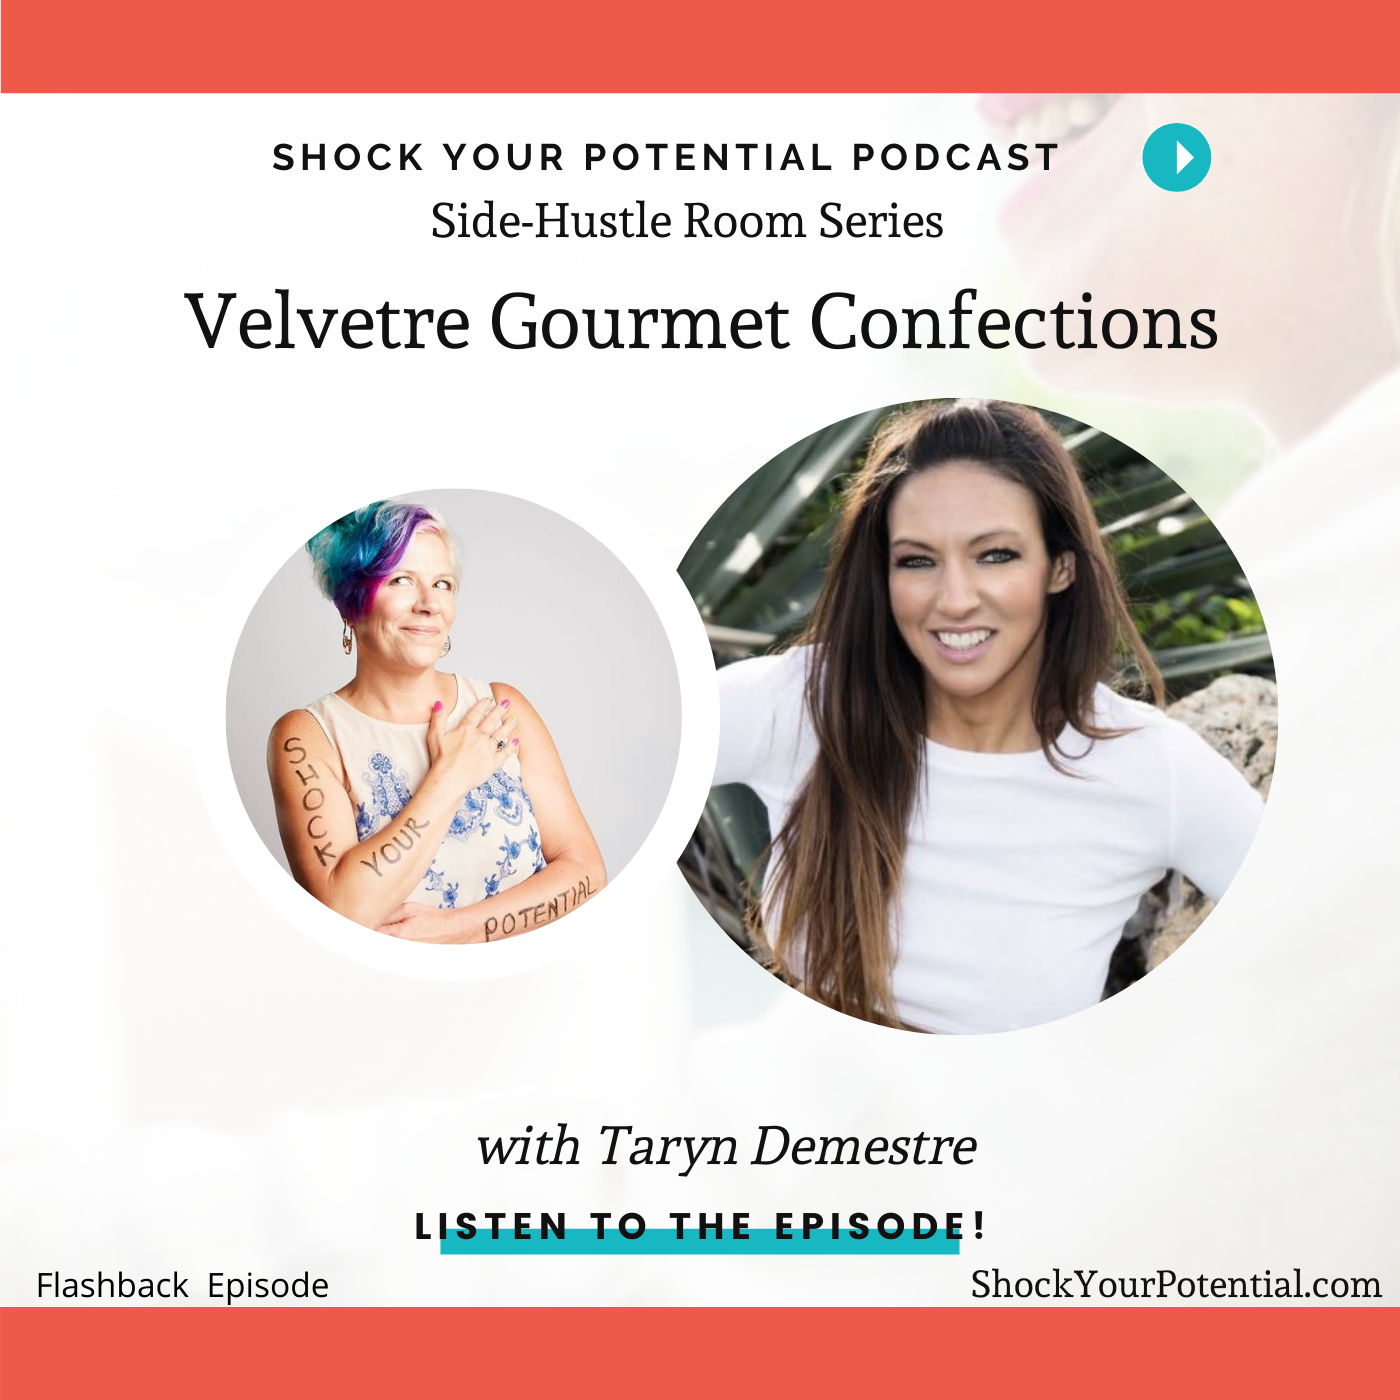 Velvetre Gourmet Confections – Taryn Demestre